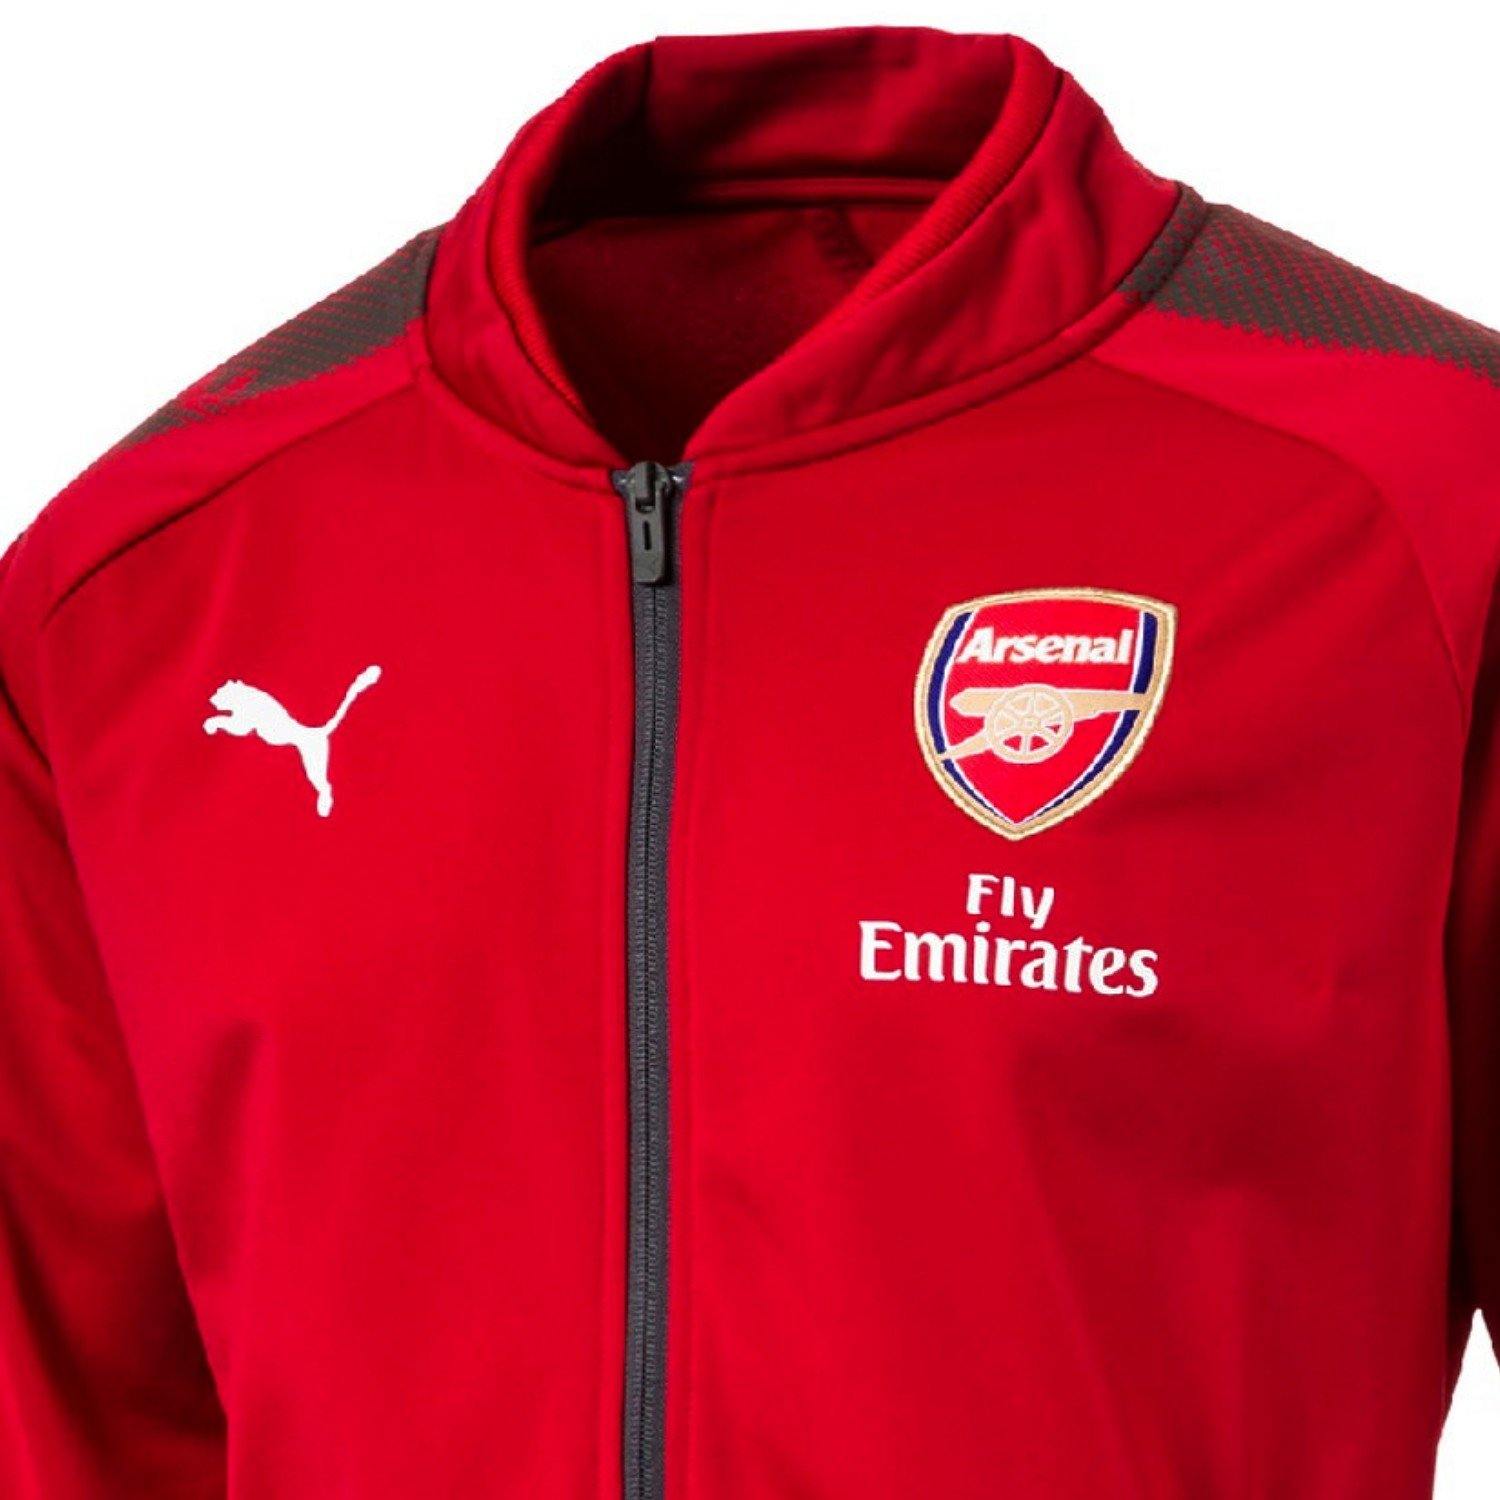 Arsenal training presentation soccer jacket 2017/18 red - Puma